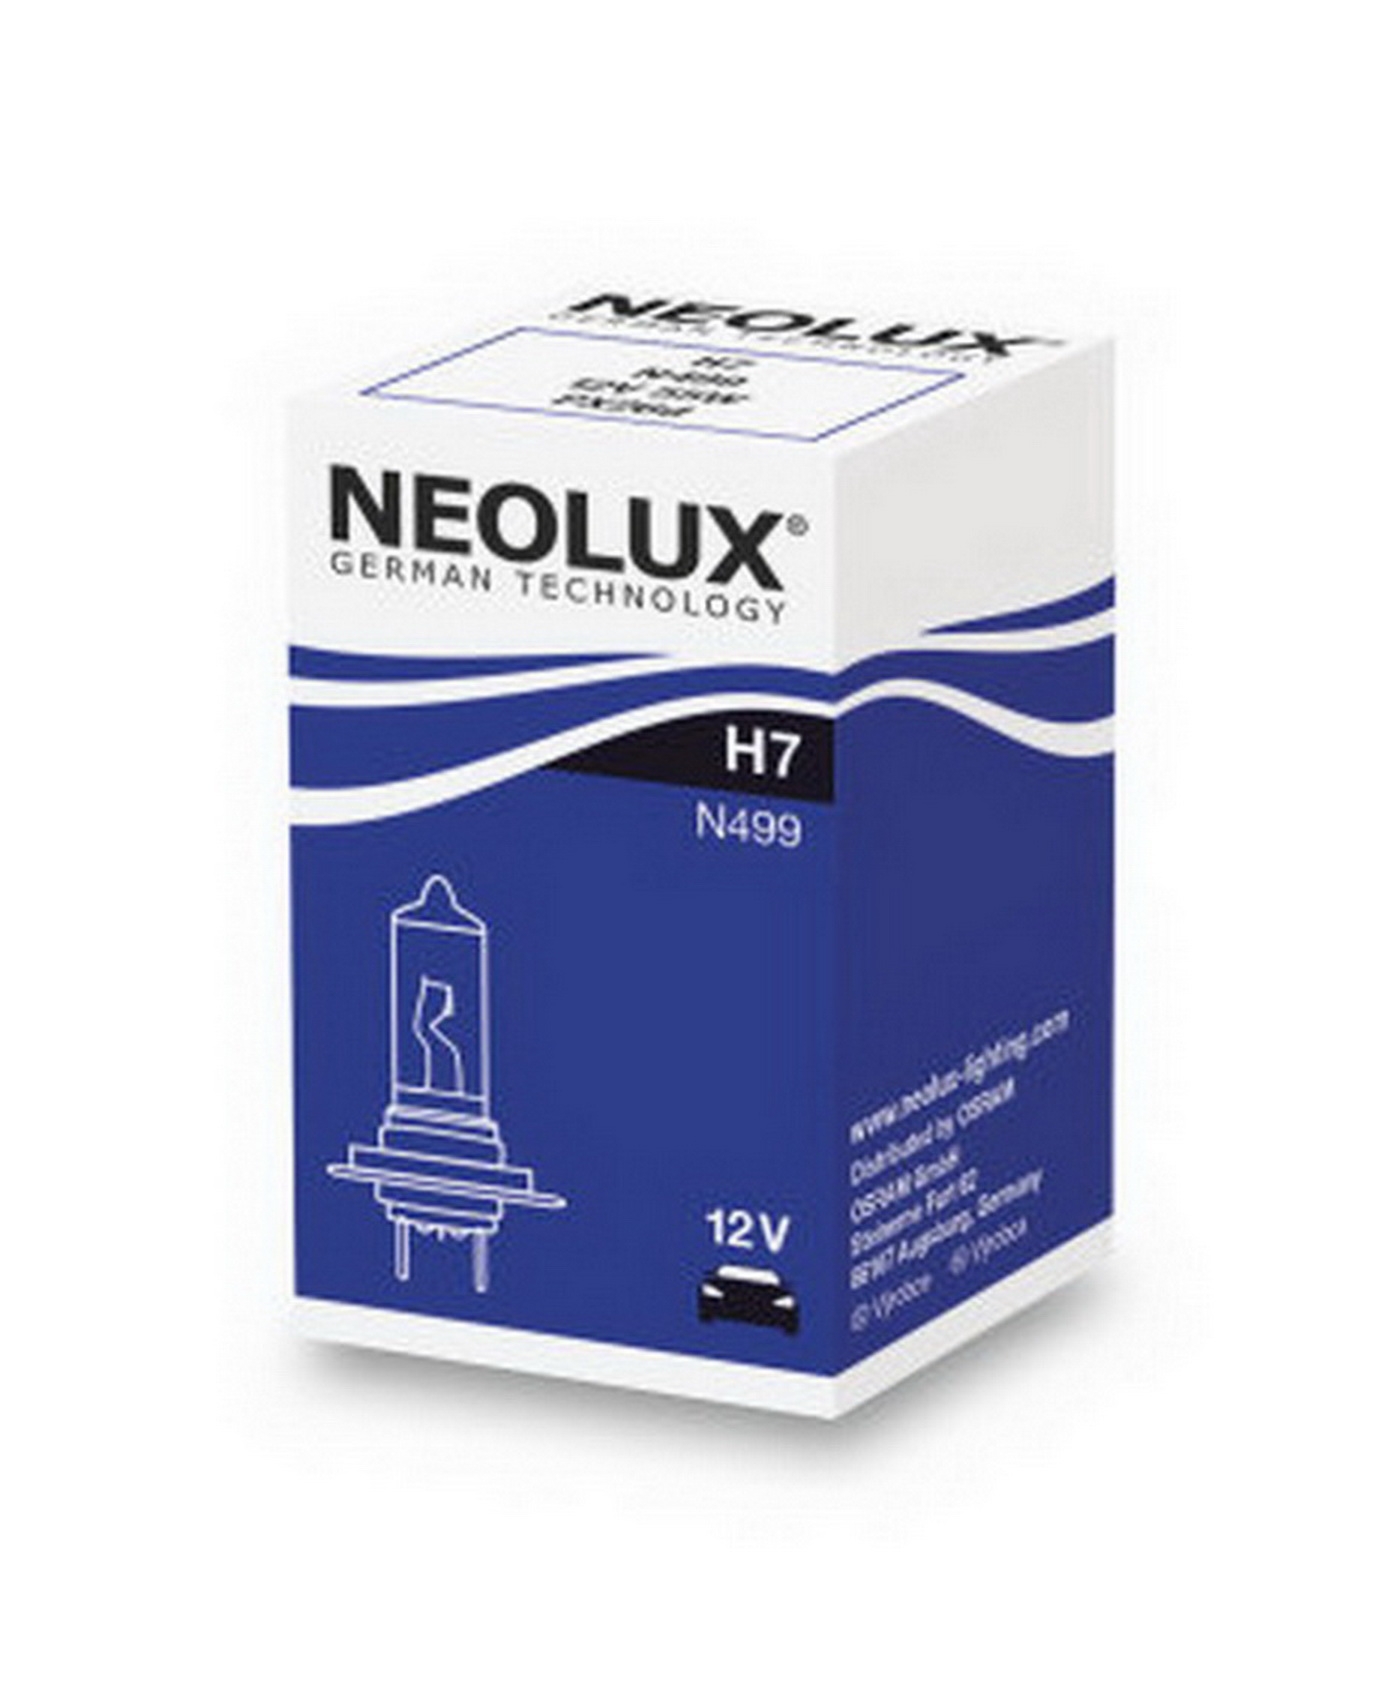 Neolux H7 halogén fényszóró N499 12V kartondoboz (1 db)